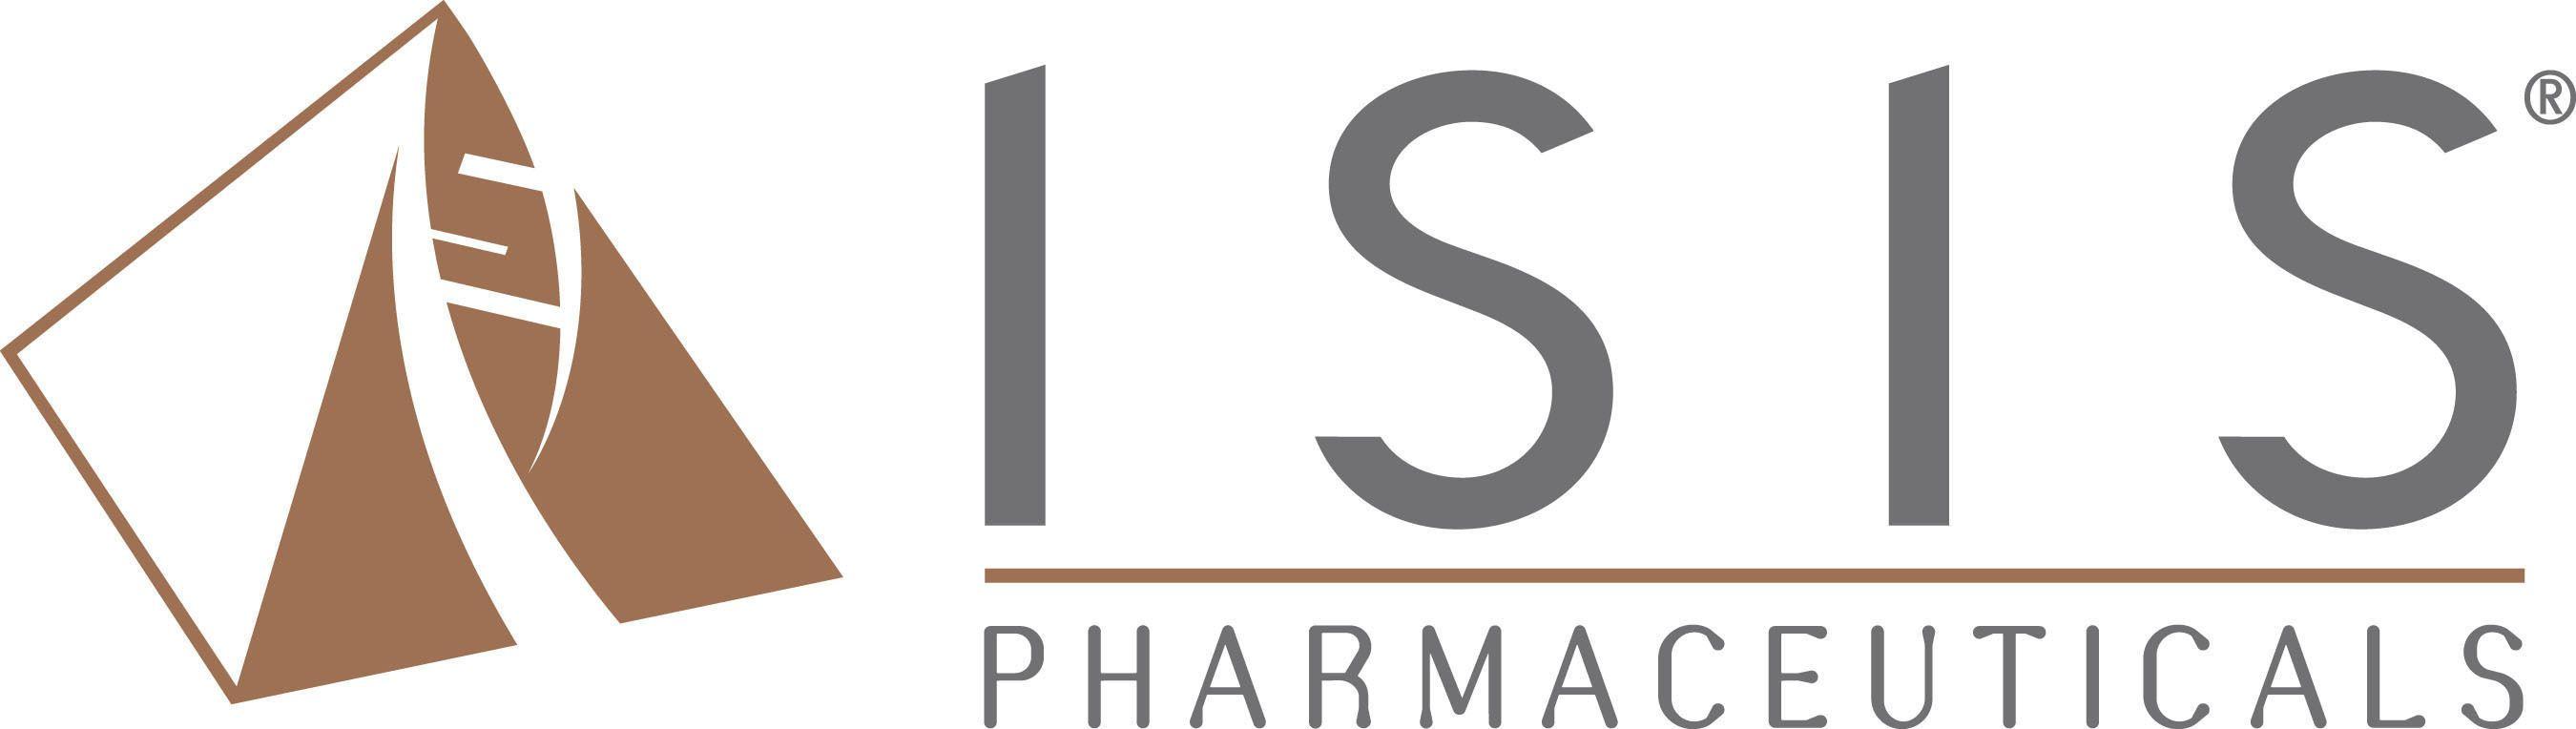 New Biogen Idec Logo - Isis Pharmaceuticals Earns $10 Million Milestone Payment From Biogen